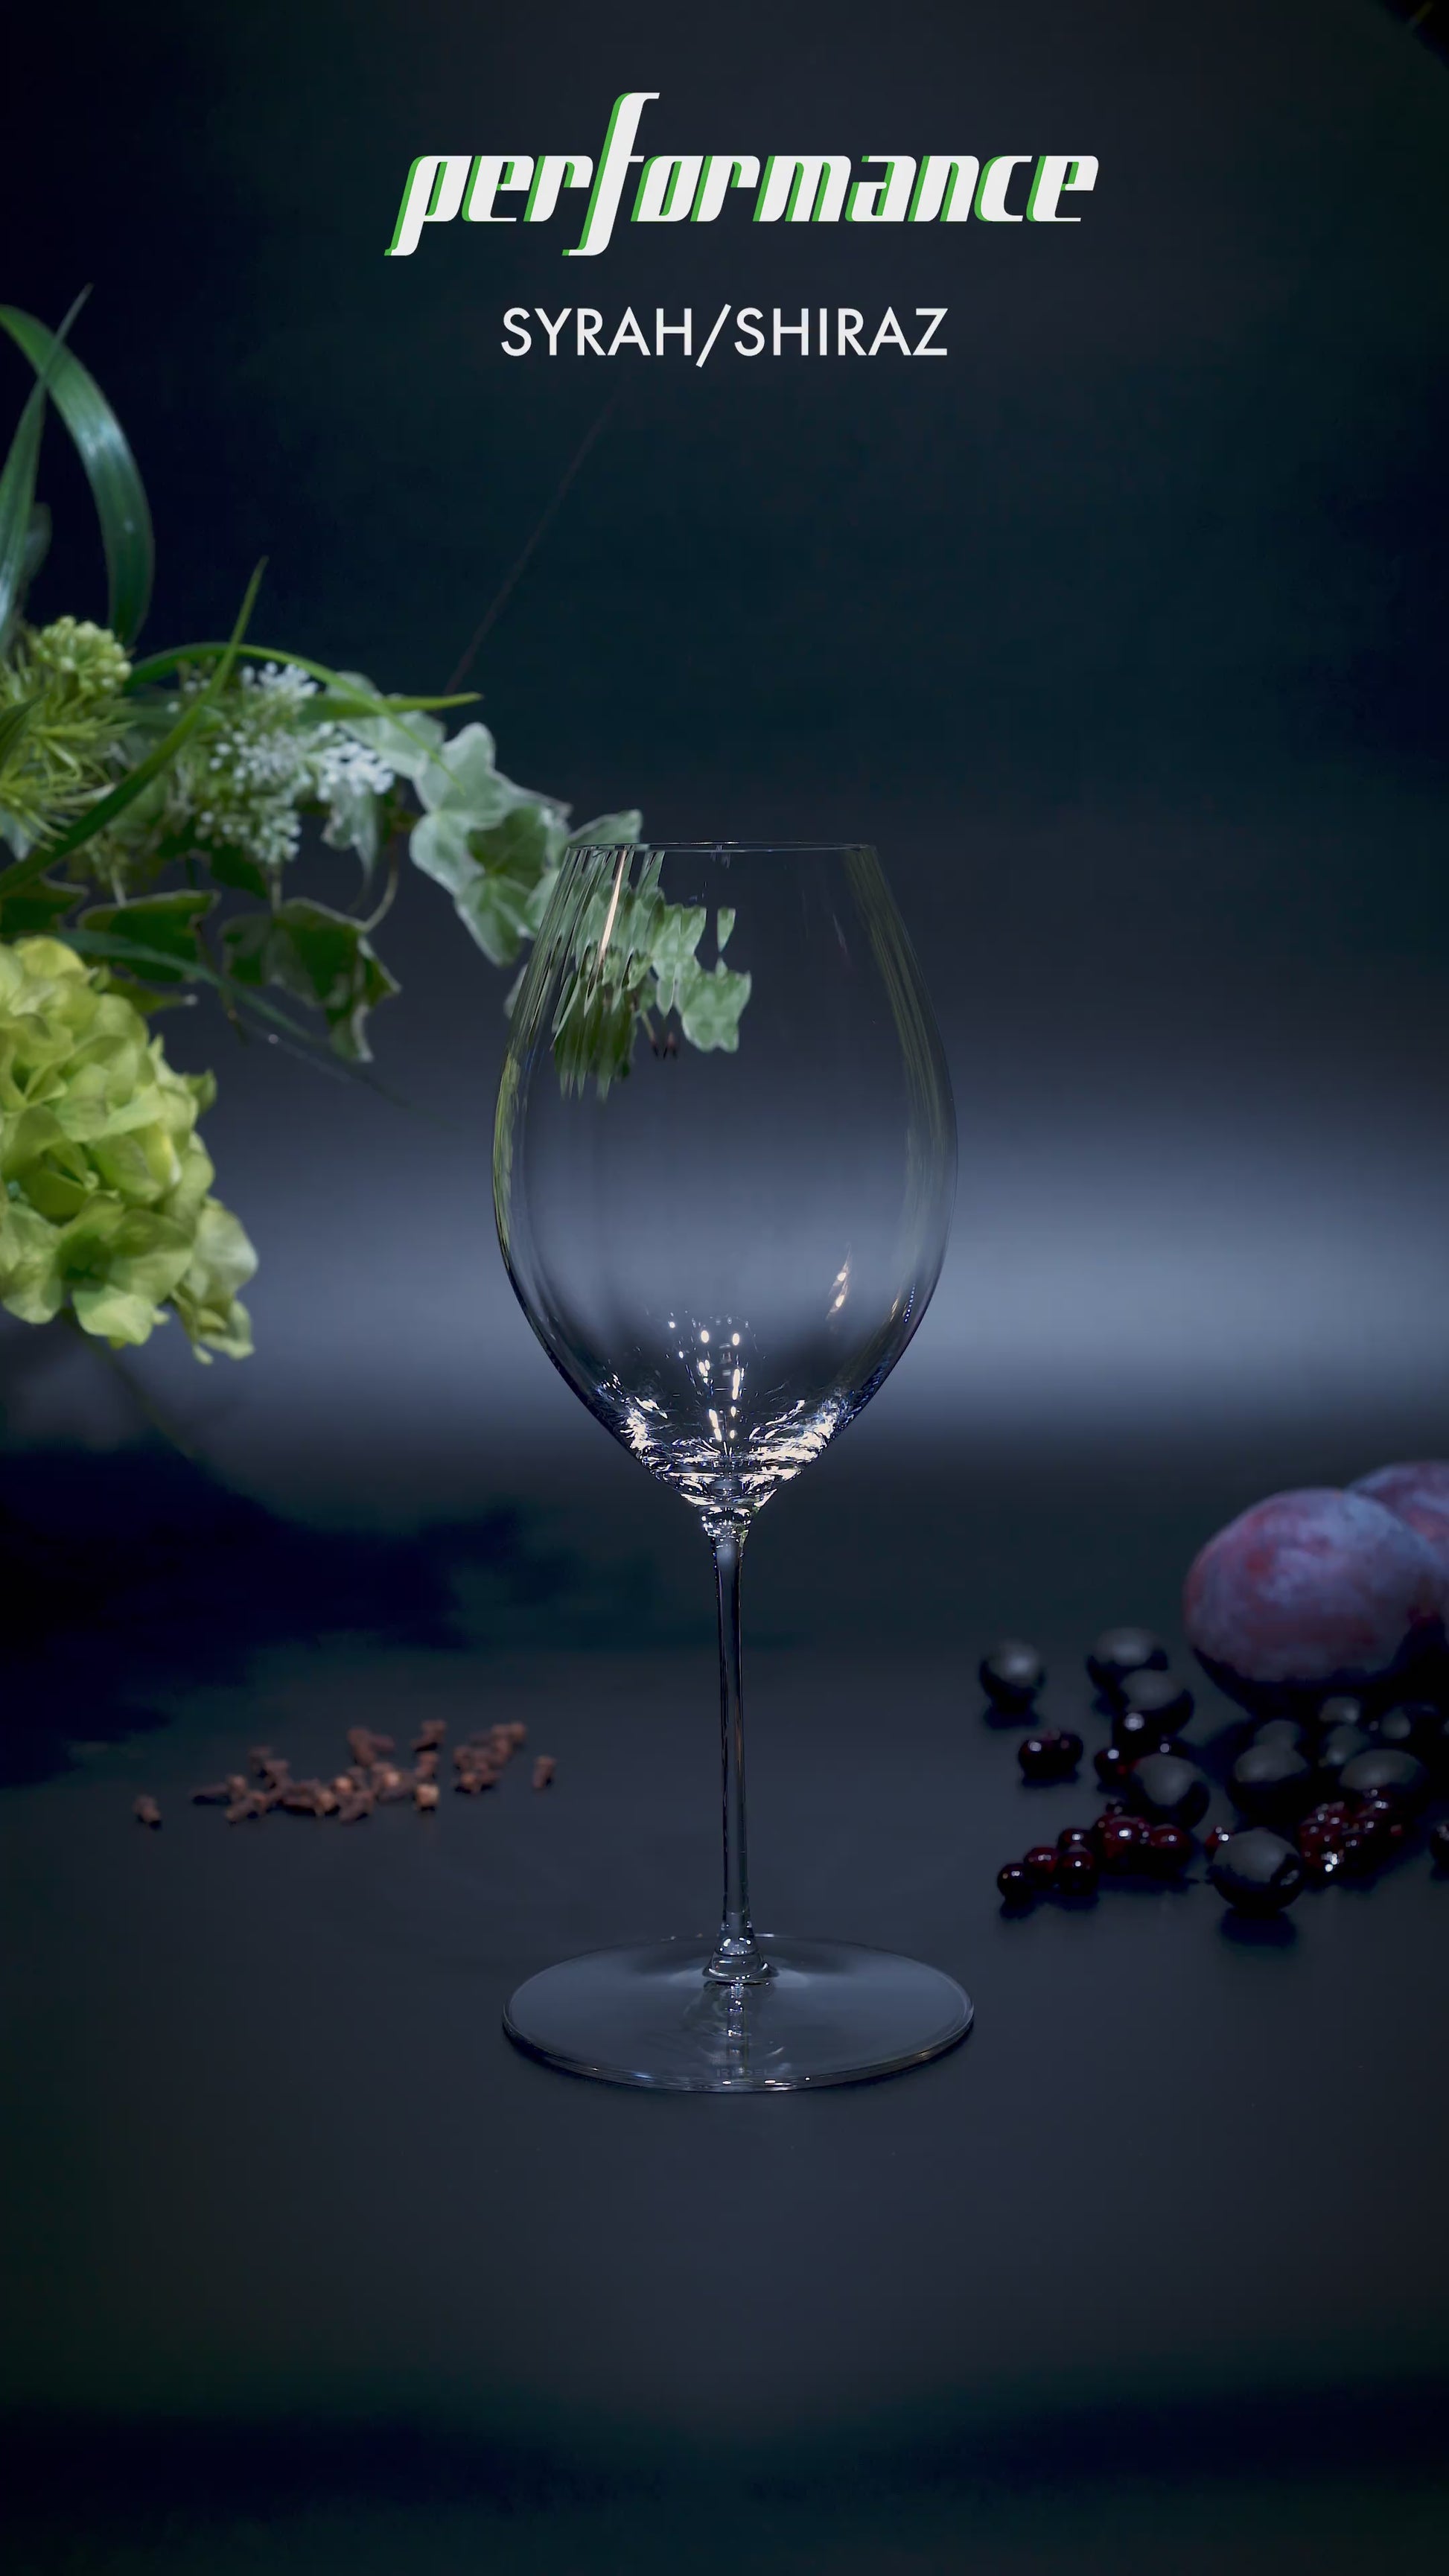 Riedel Performance Wine Glasses, Set of 4